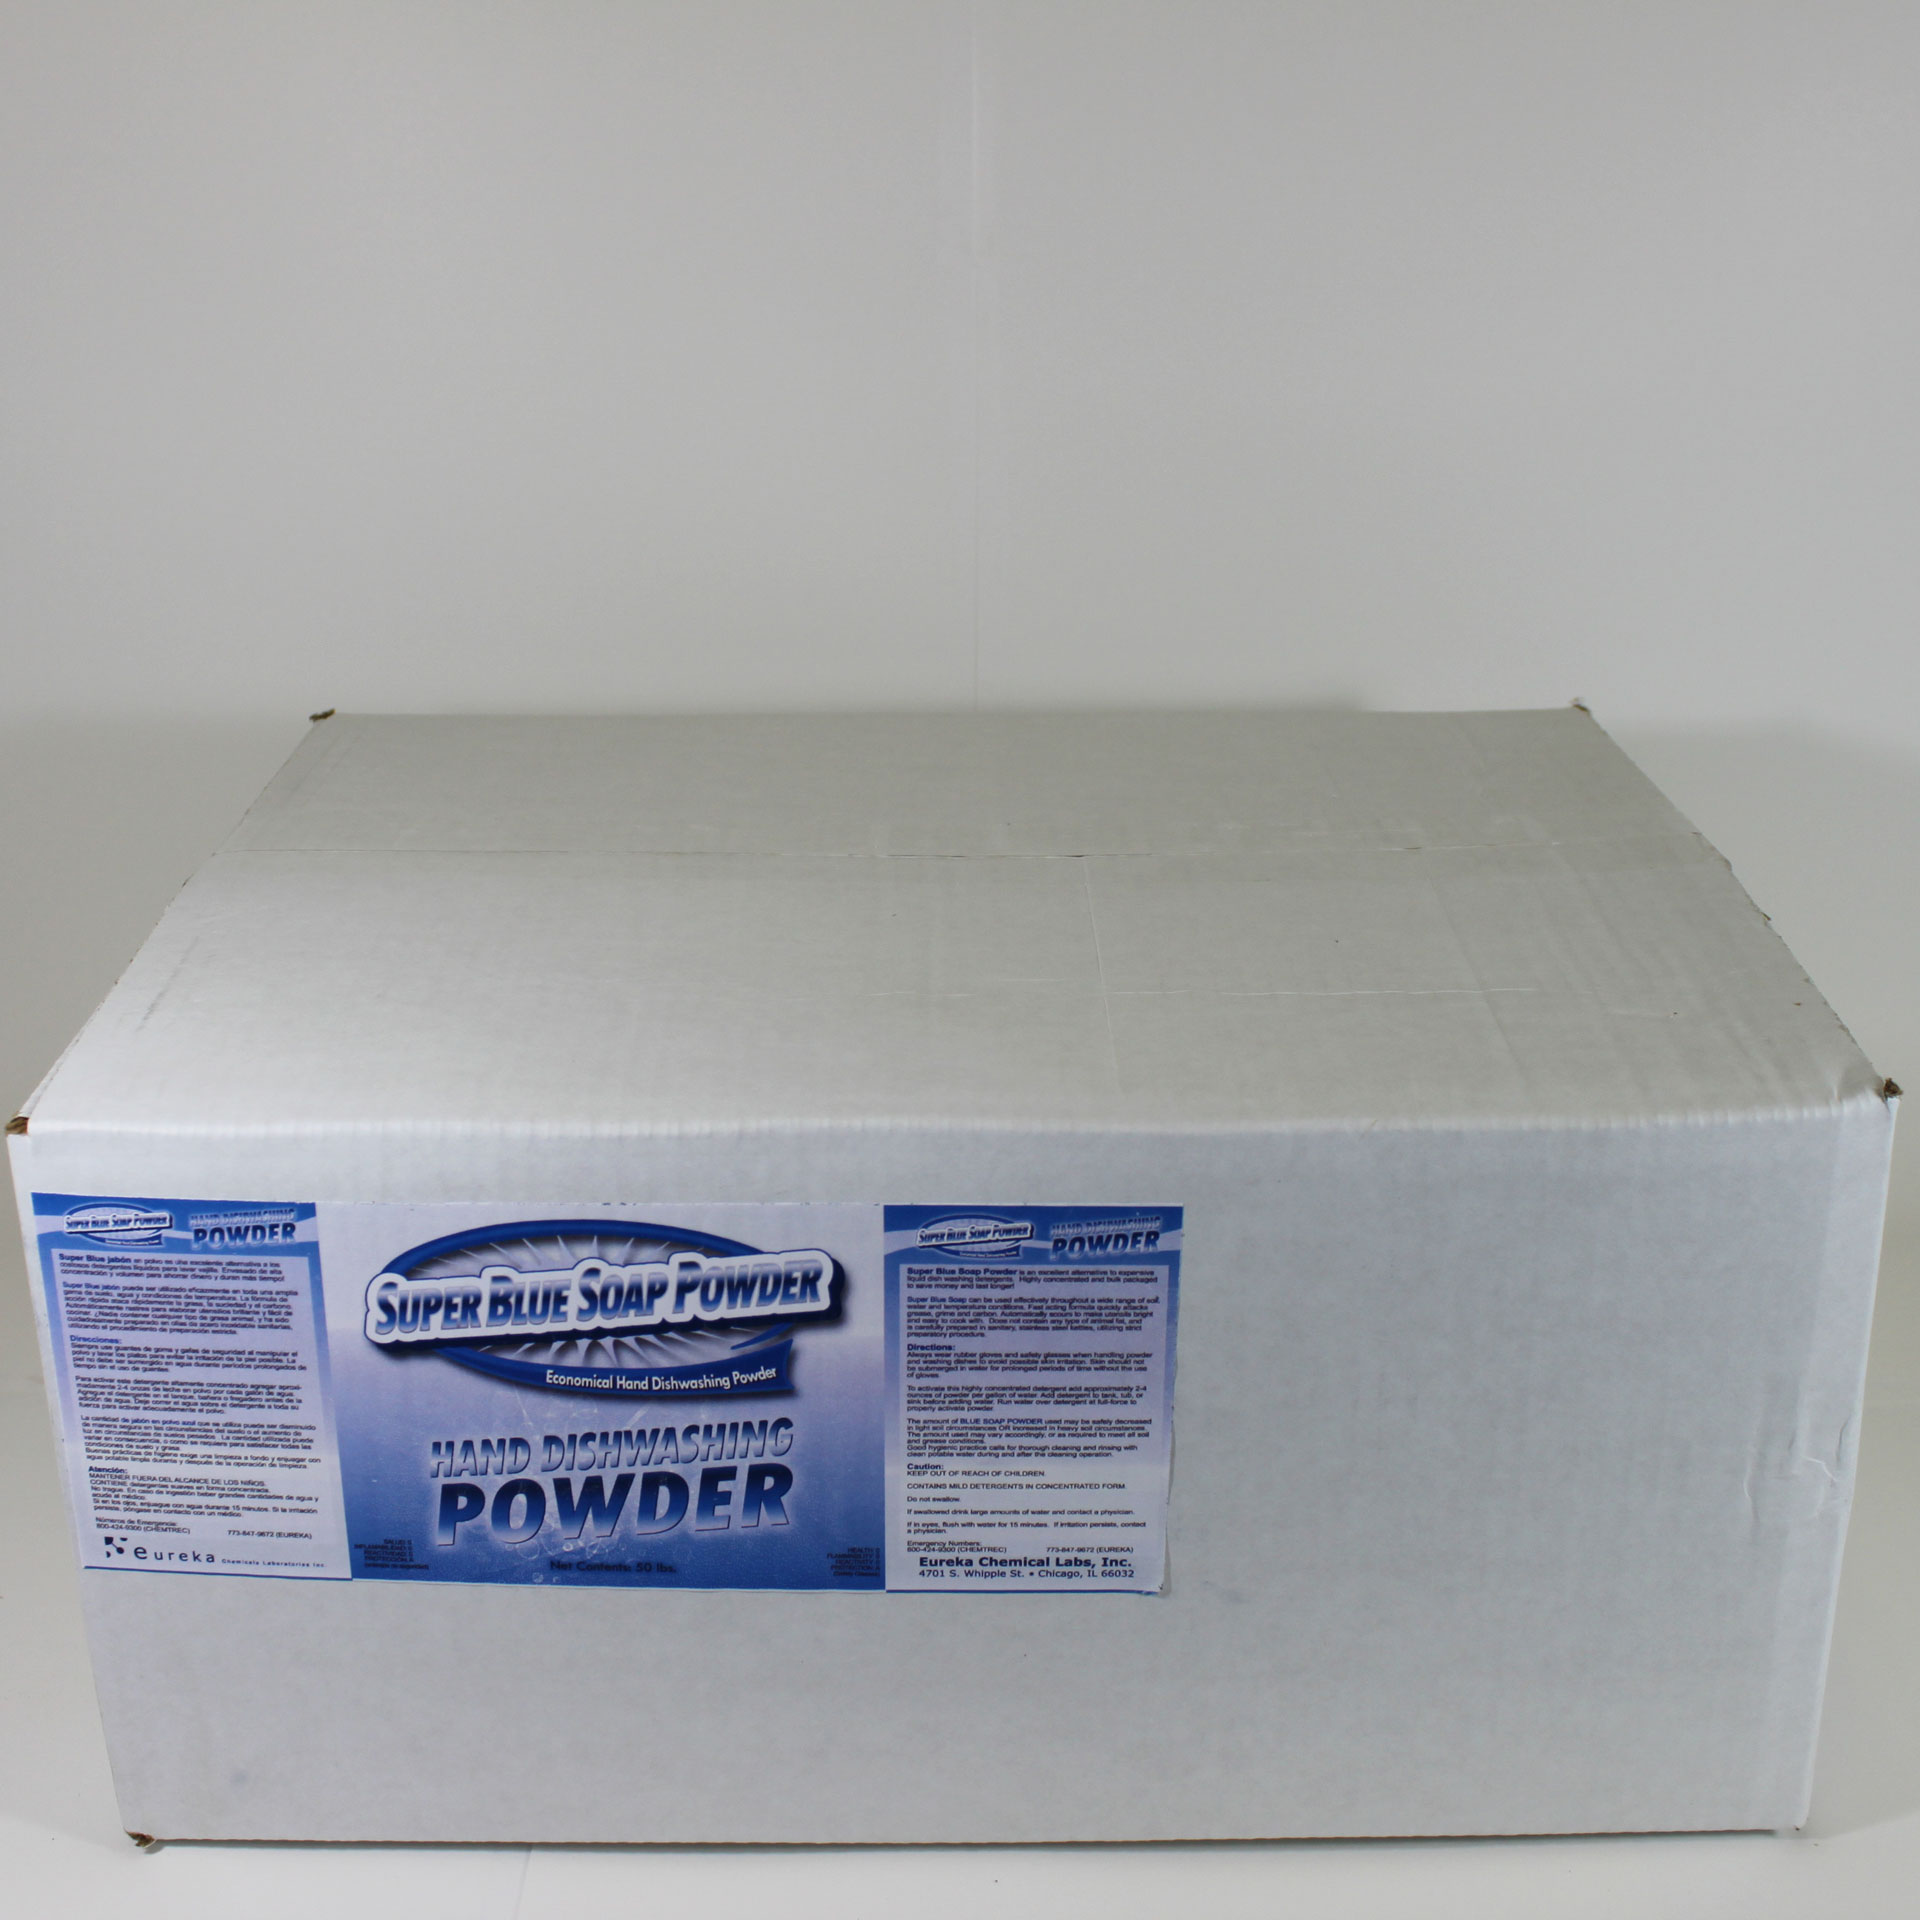 Box of Super Blue Soap Powder.